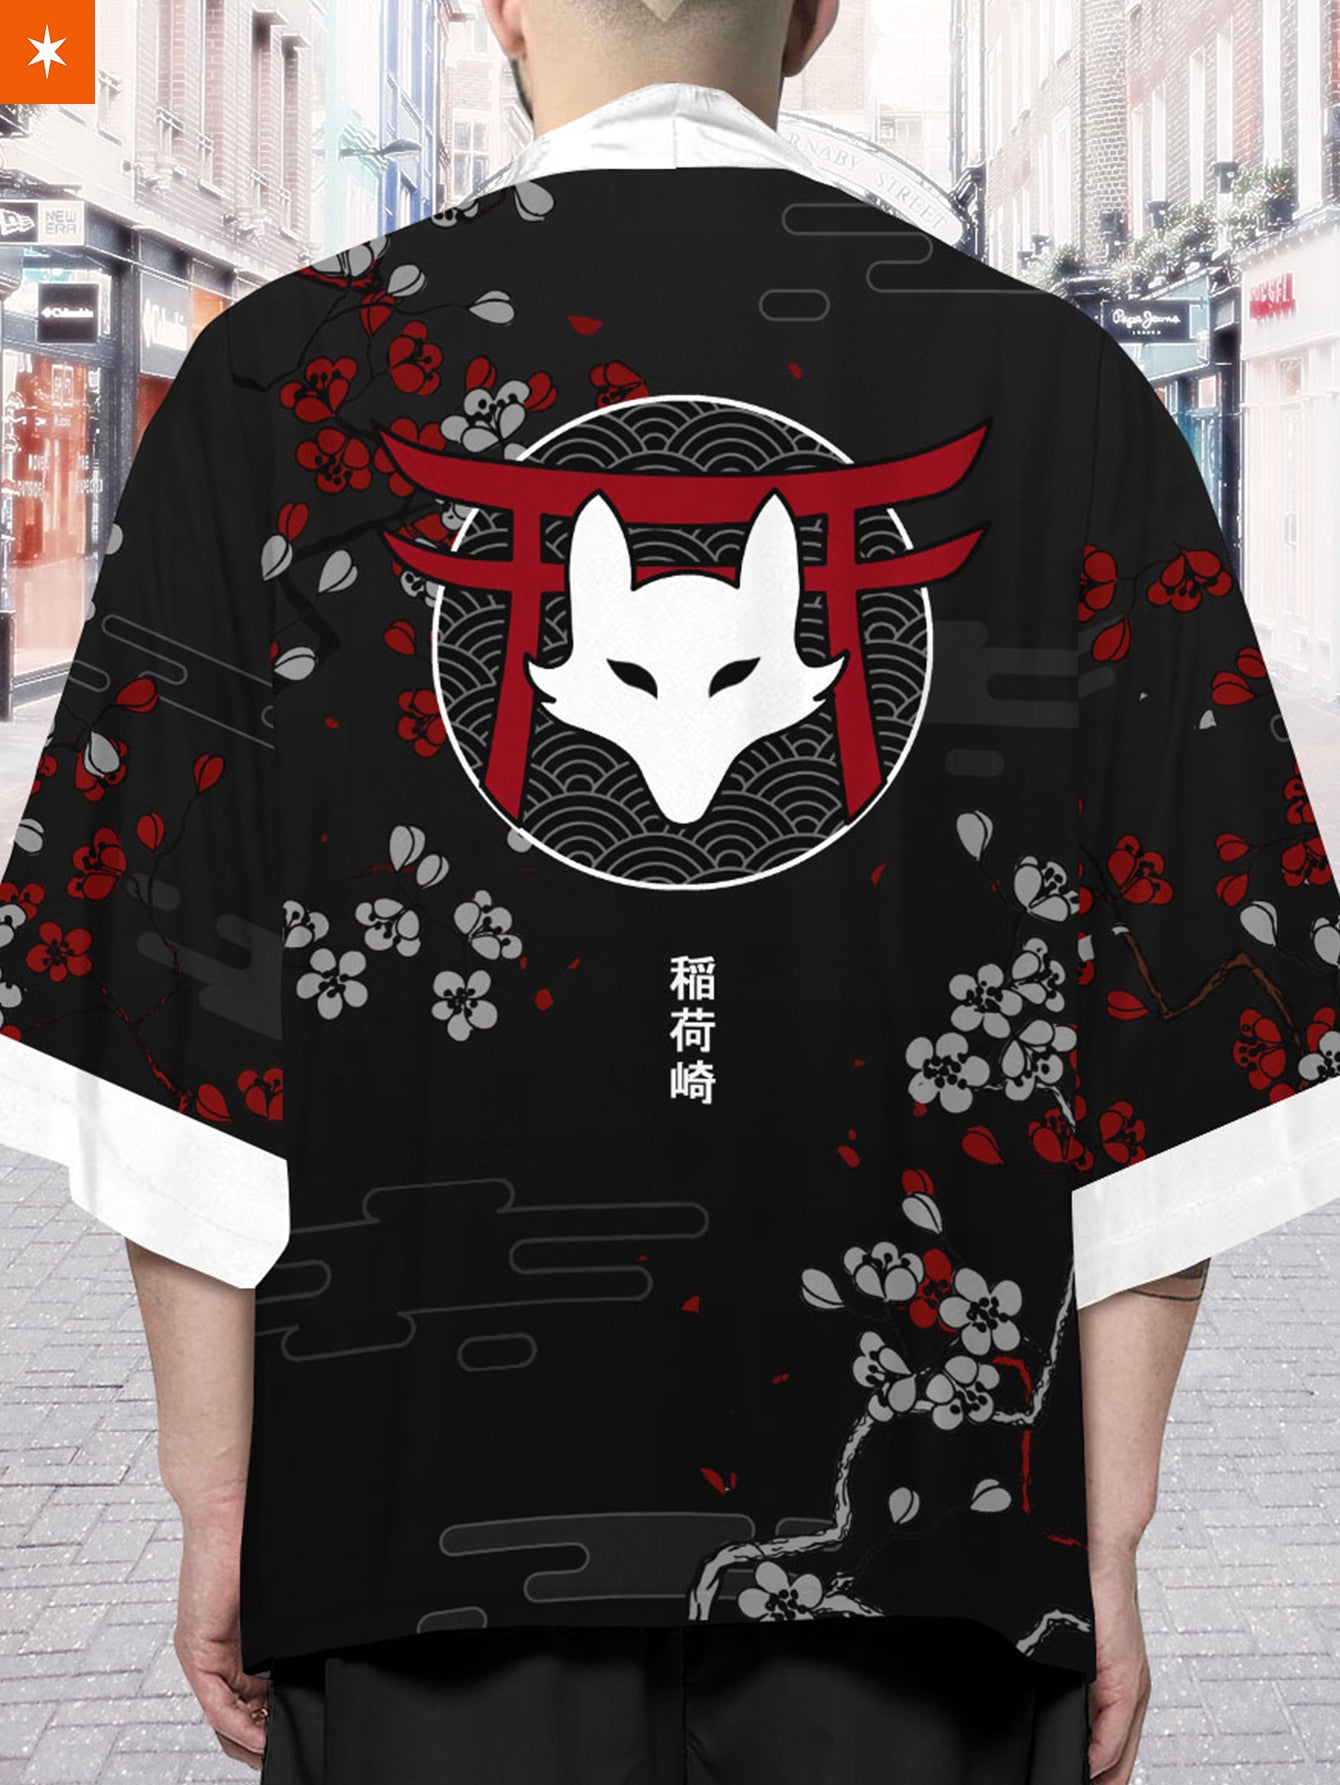 Fandomaniax - Inarizaki Foxes Kimono